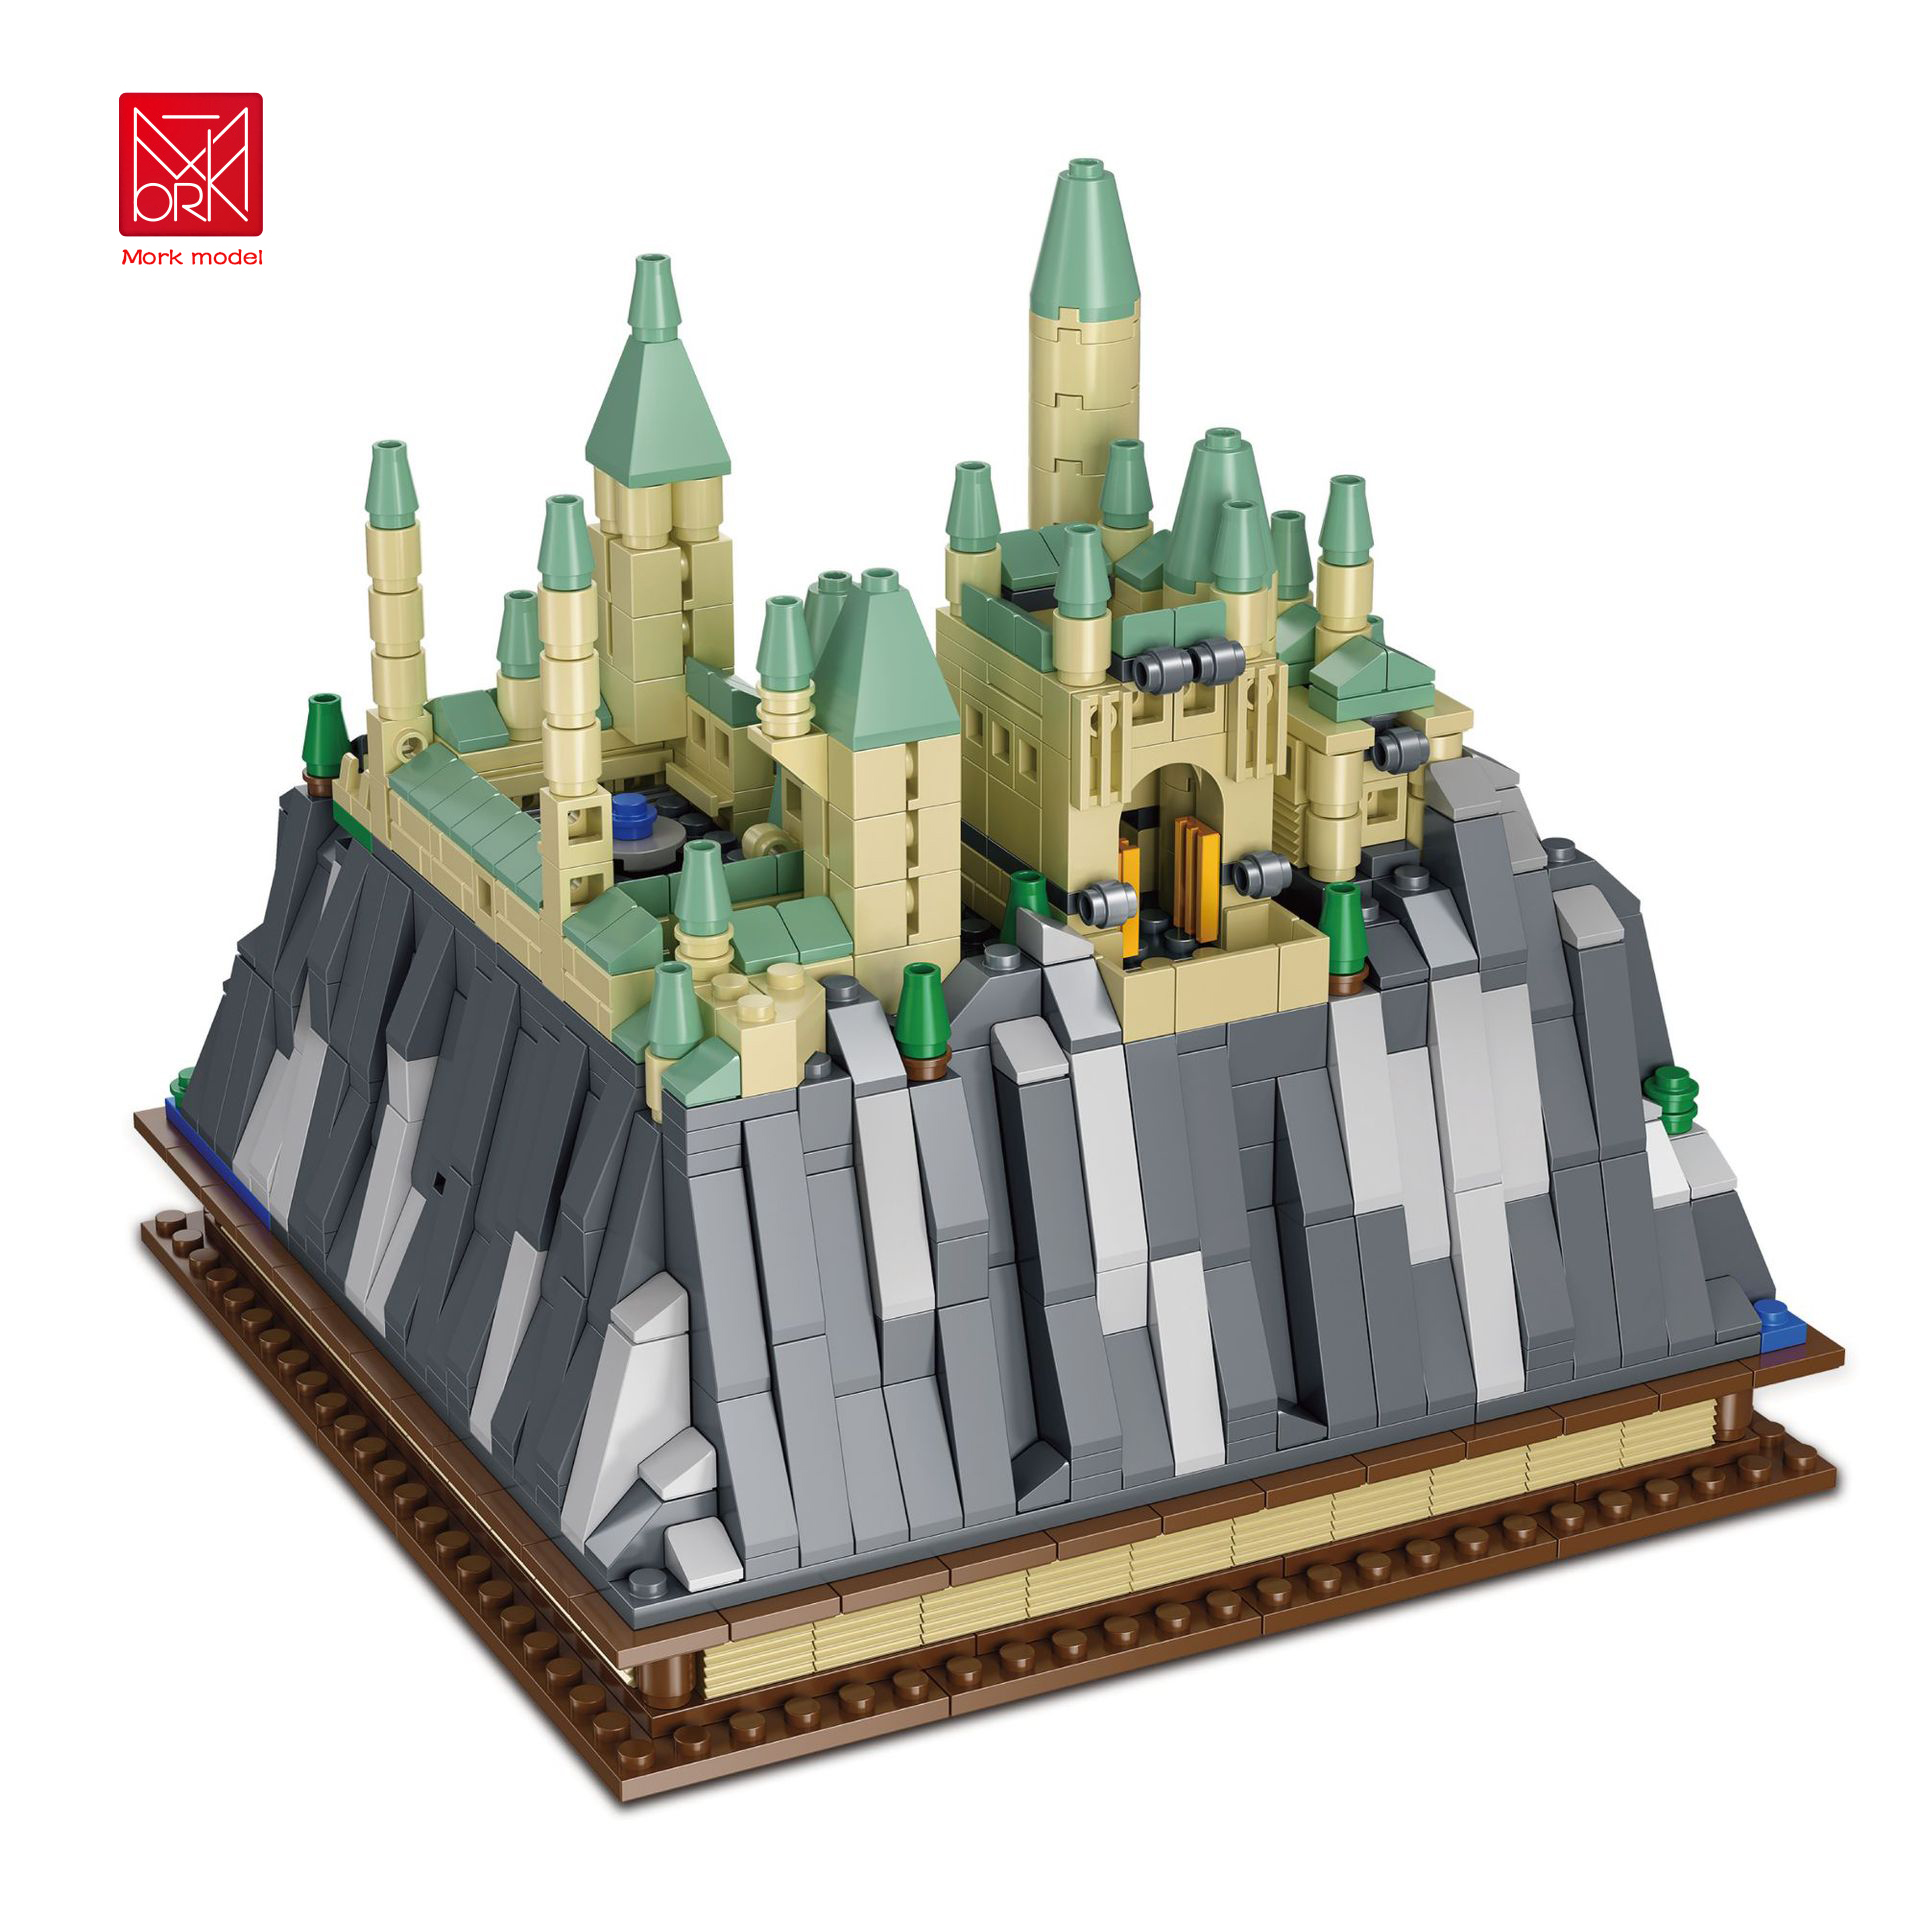 US$ 18.88 - Mork 031006 Mini Hogwarts Castle - m.morkmodel.com